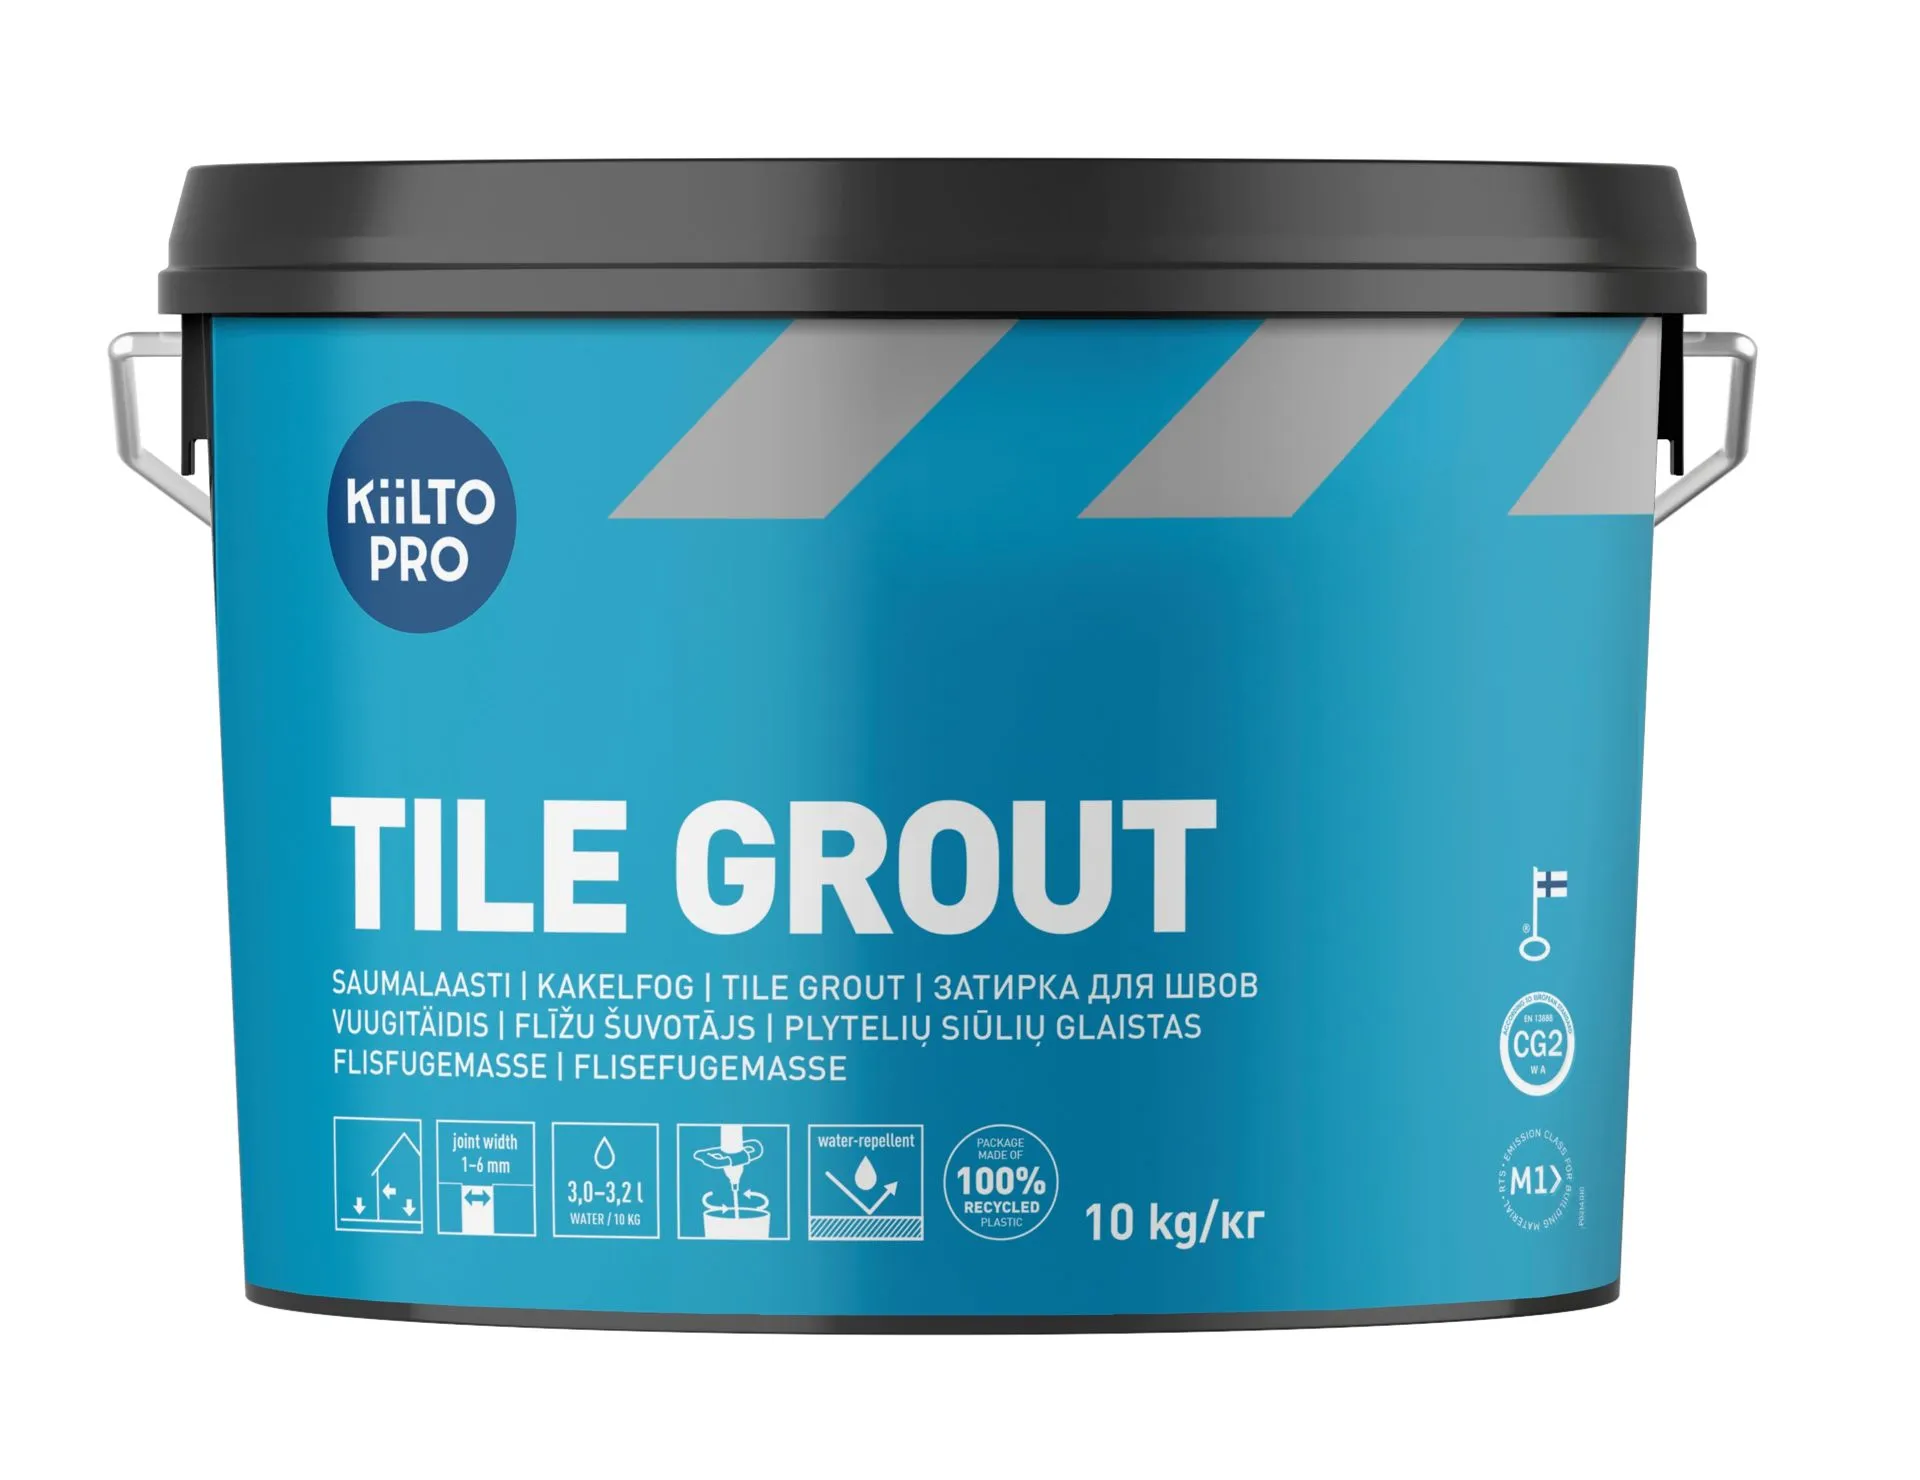 Kiilto Pro Tile grout saumalaasti 39 marble white 10 kg